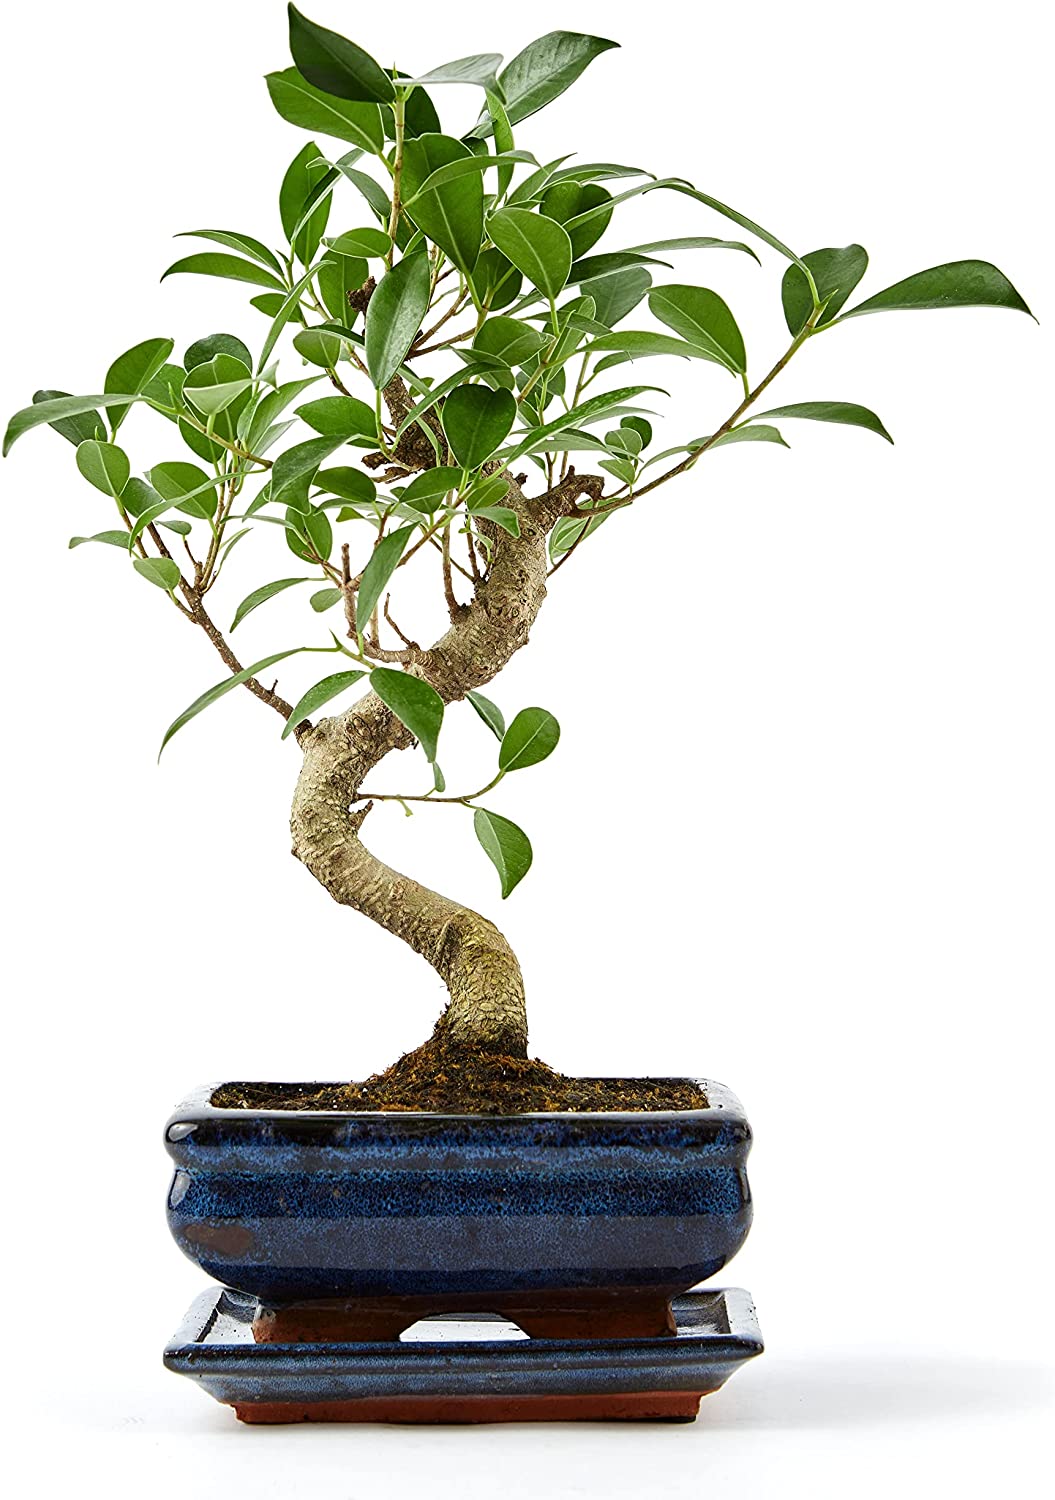 15cm Ficus Bonsai Houseplant in Blue Pot